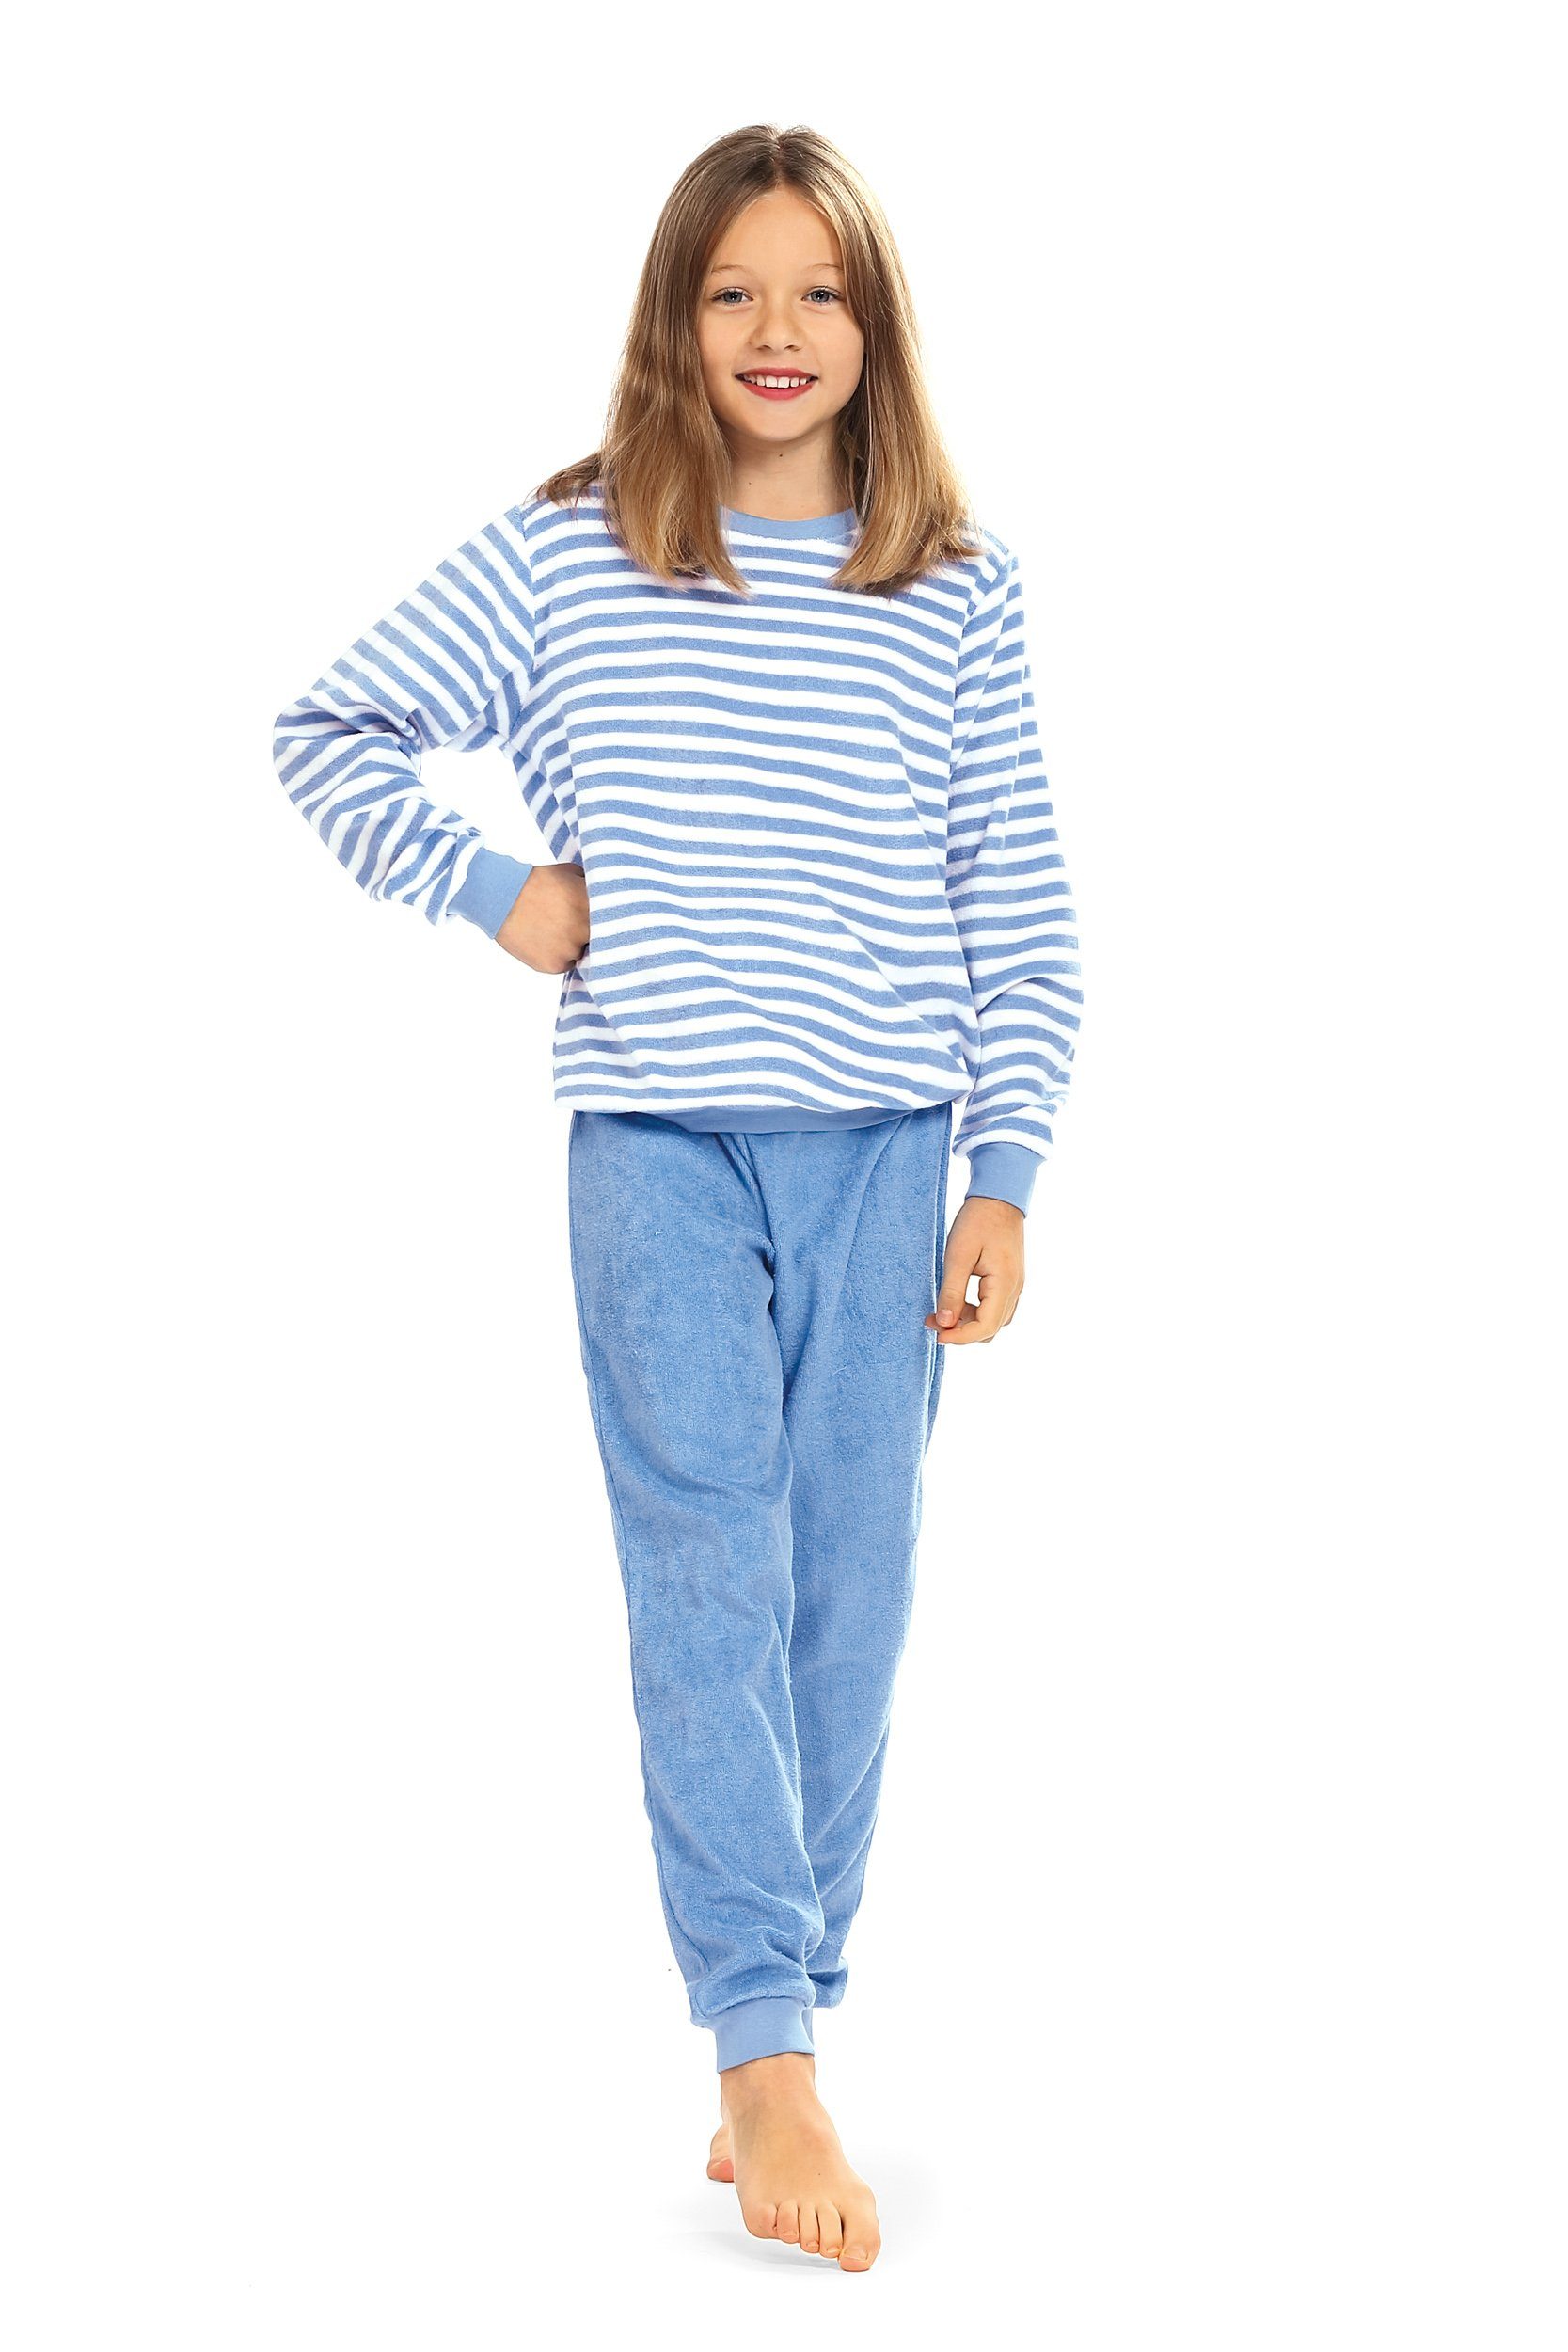 comtessa Schlafanzug Comte Kids (Set, 2 tlg., 2-teilig) Mädchen Schlafanzug Pyjama Langarm Frottee Baumwolle Ringel blau